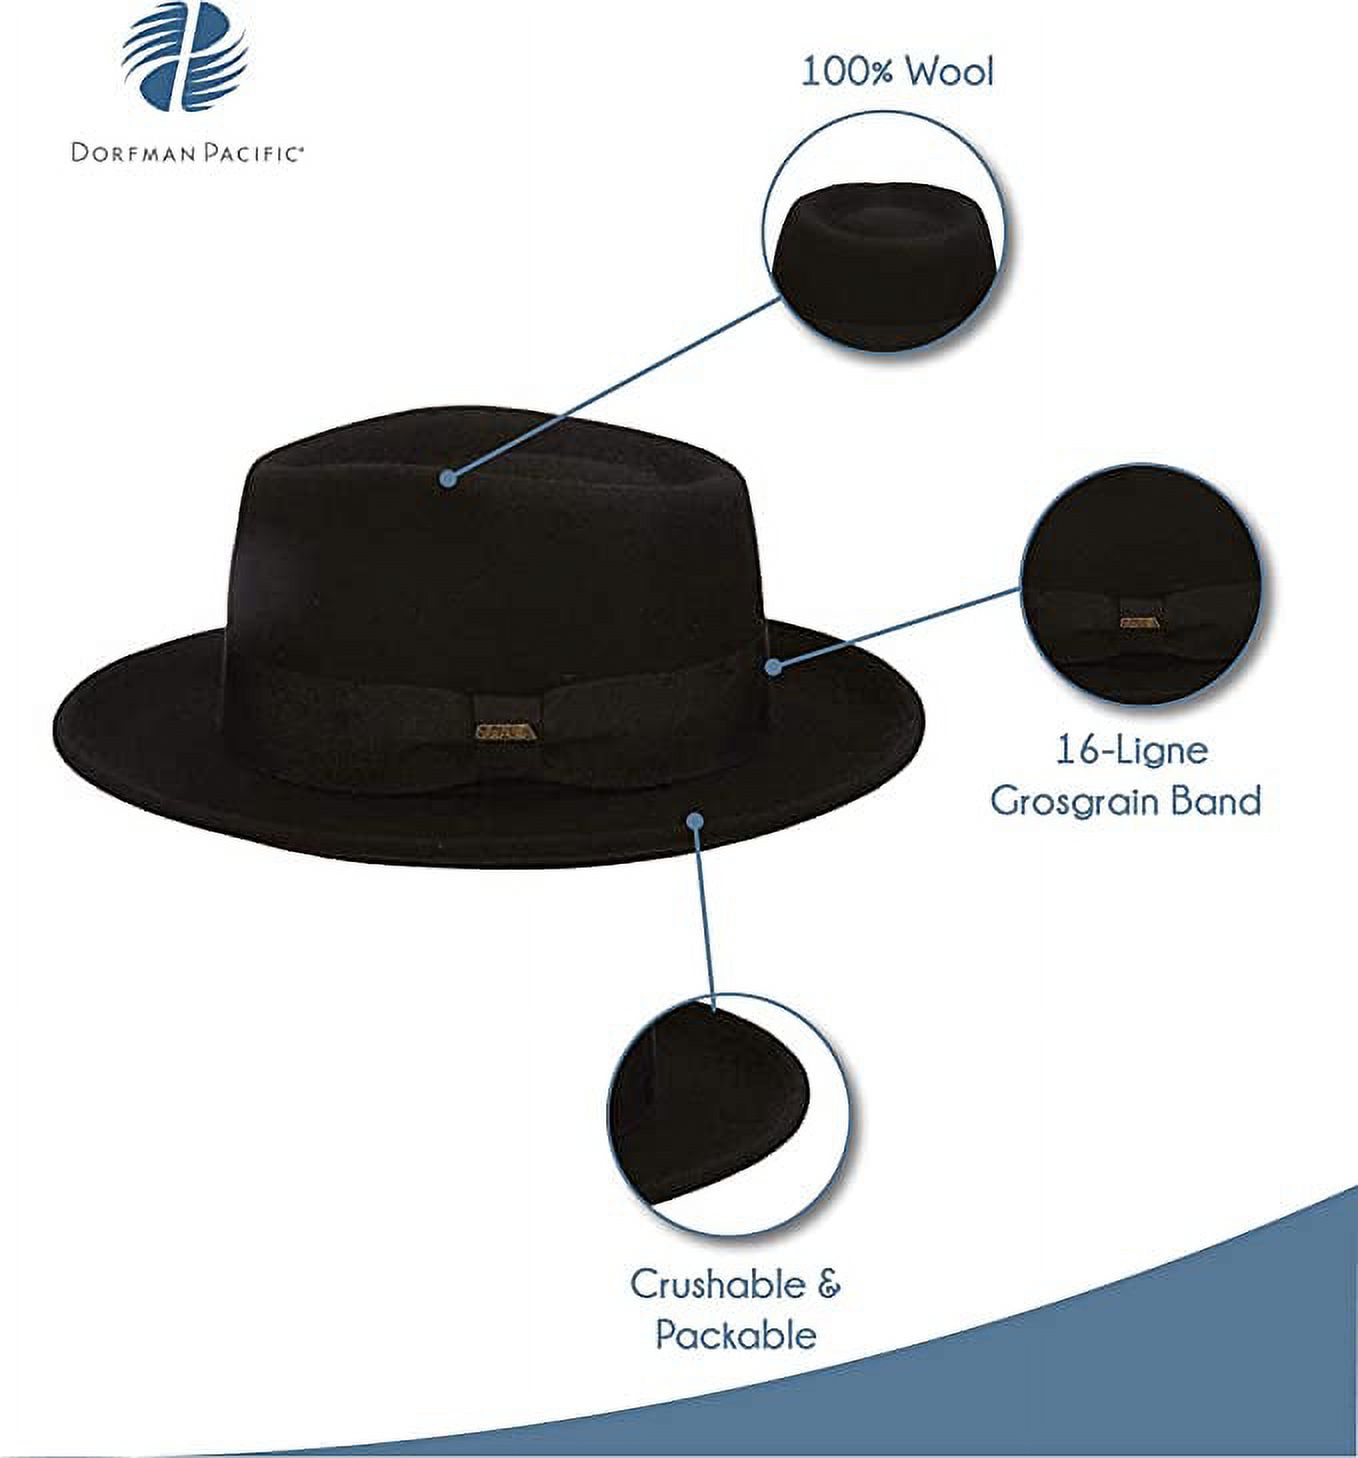 Scala Classico Men's Wool Felt Crushable Black Fedora Hat - image 2 of 5